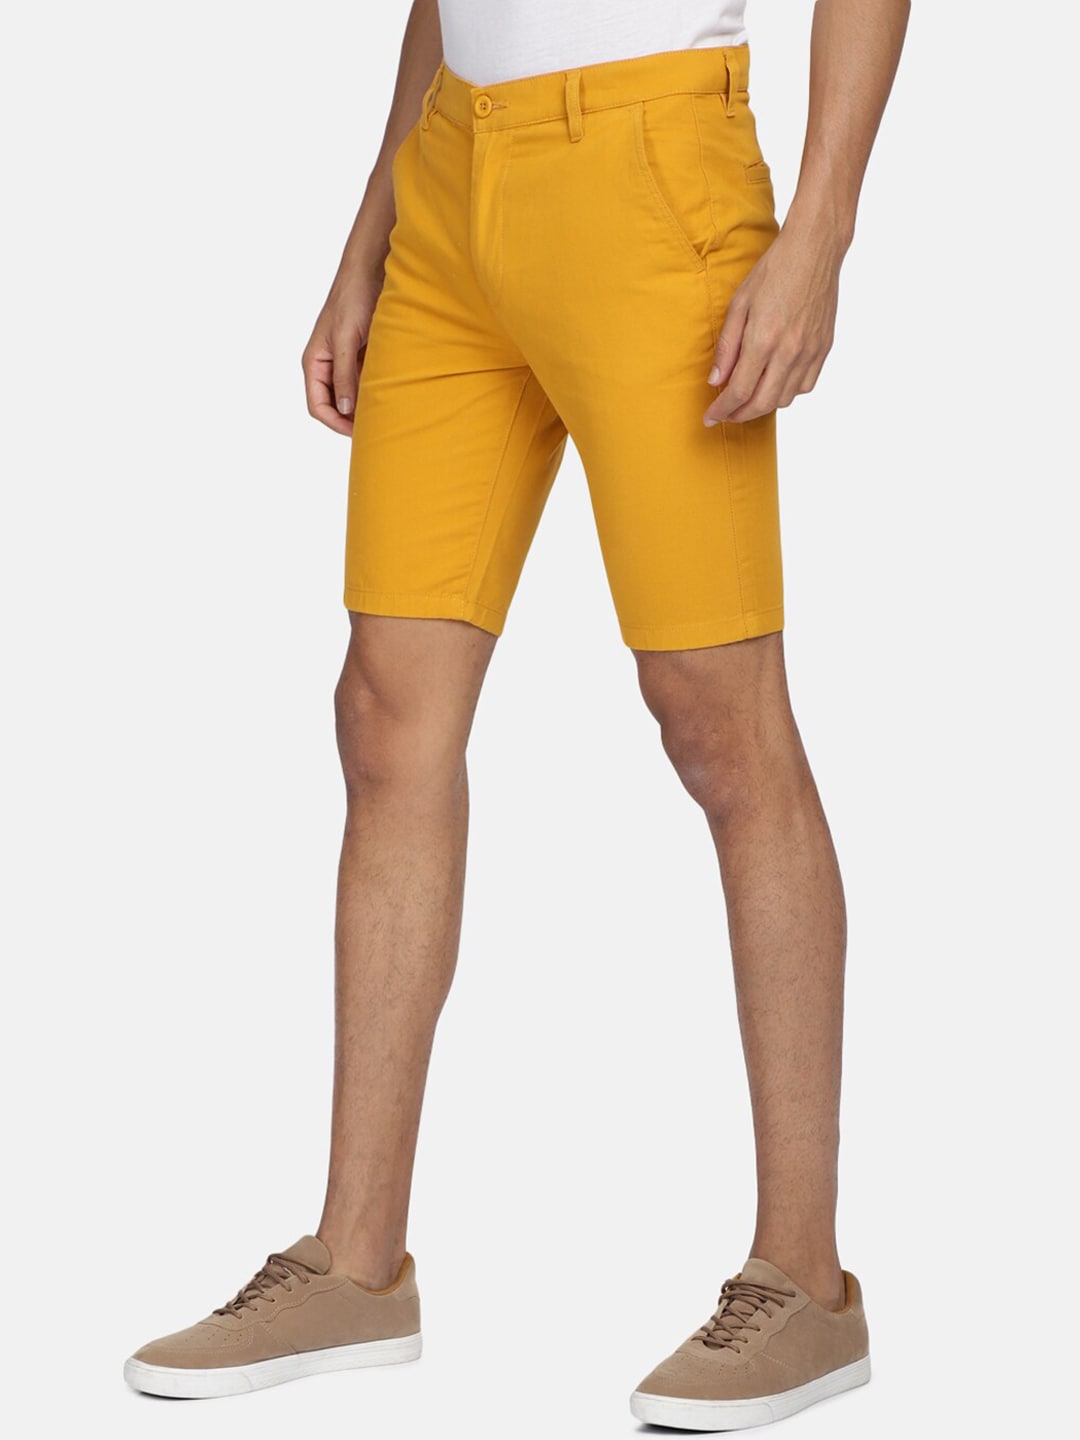 Shop Men Solid Casual Shorts Online.